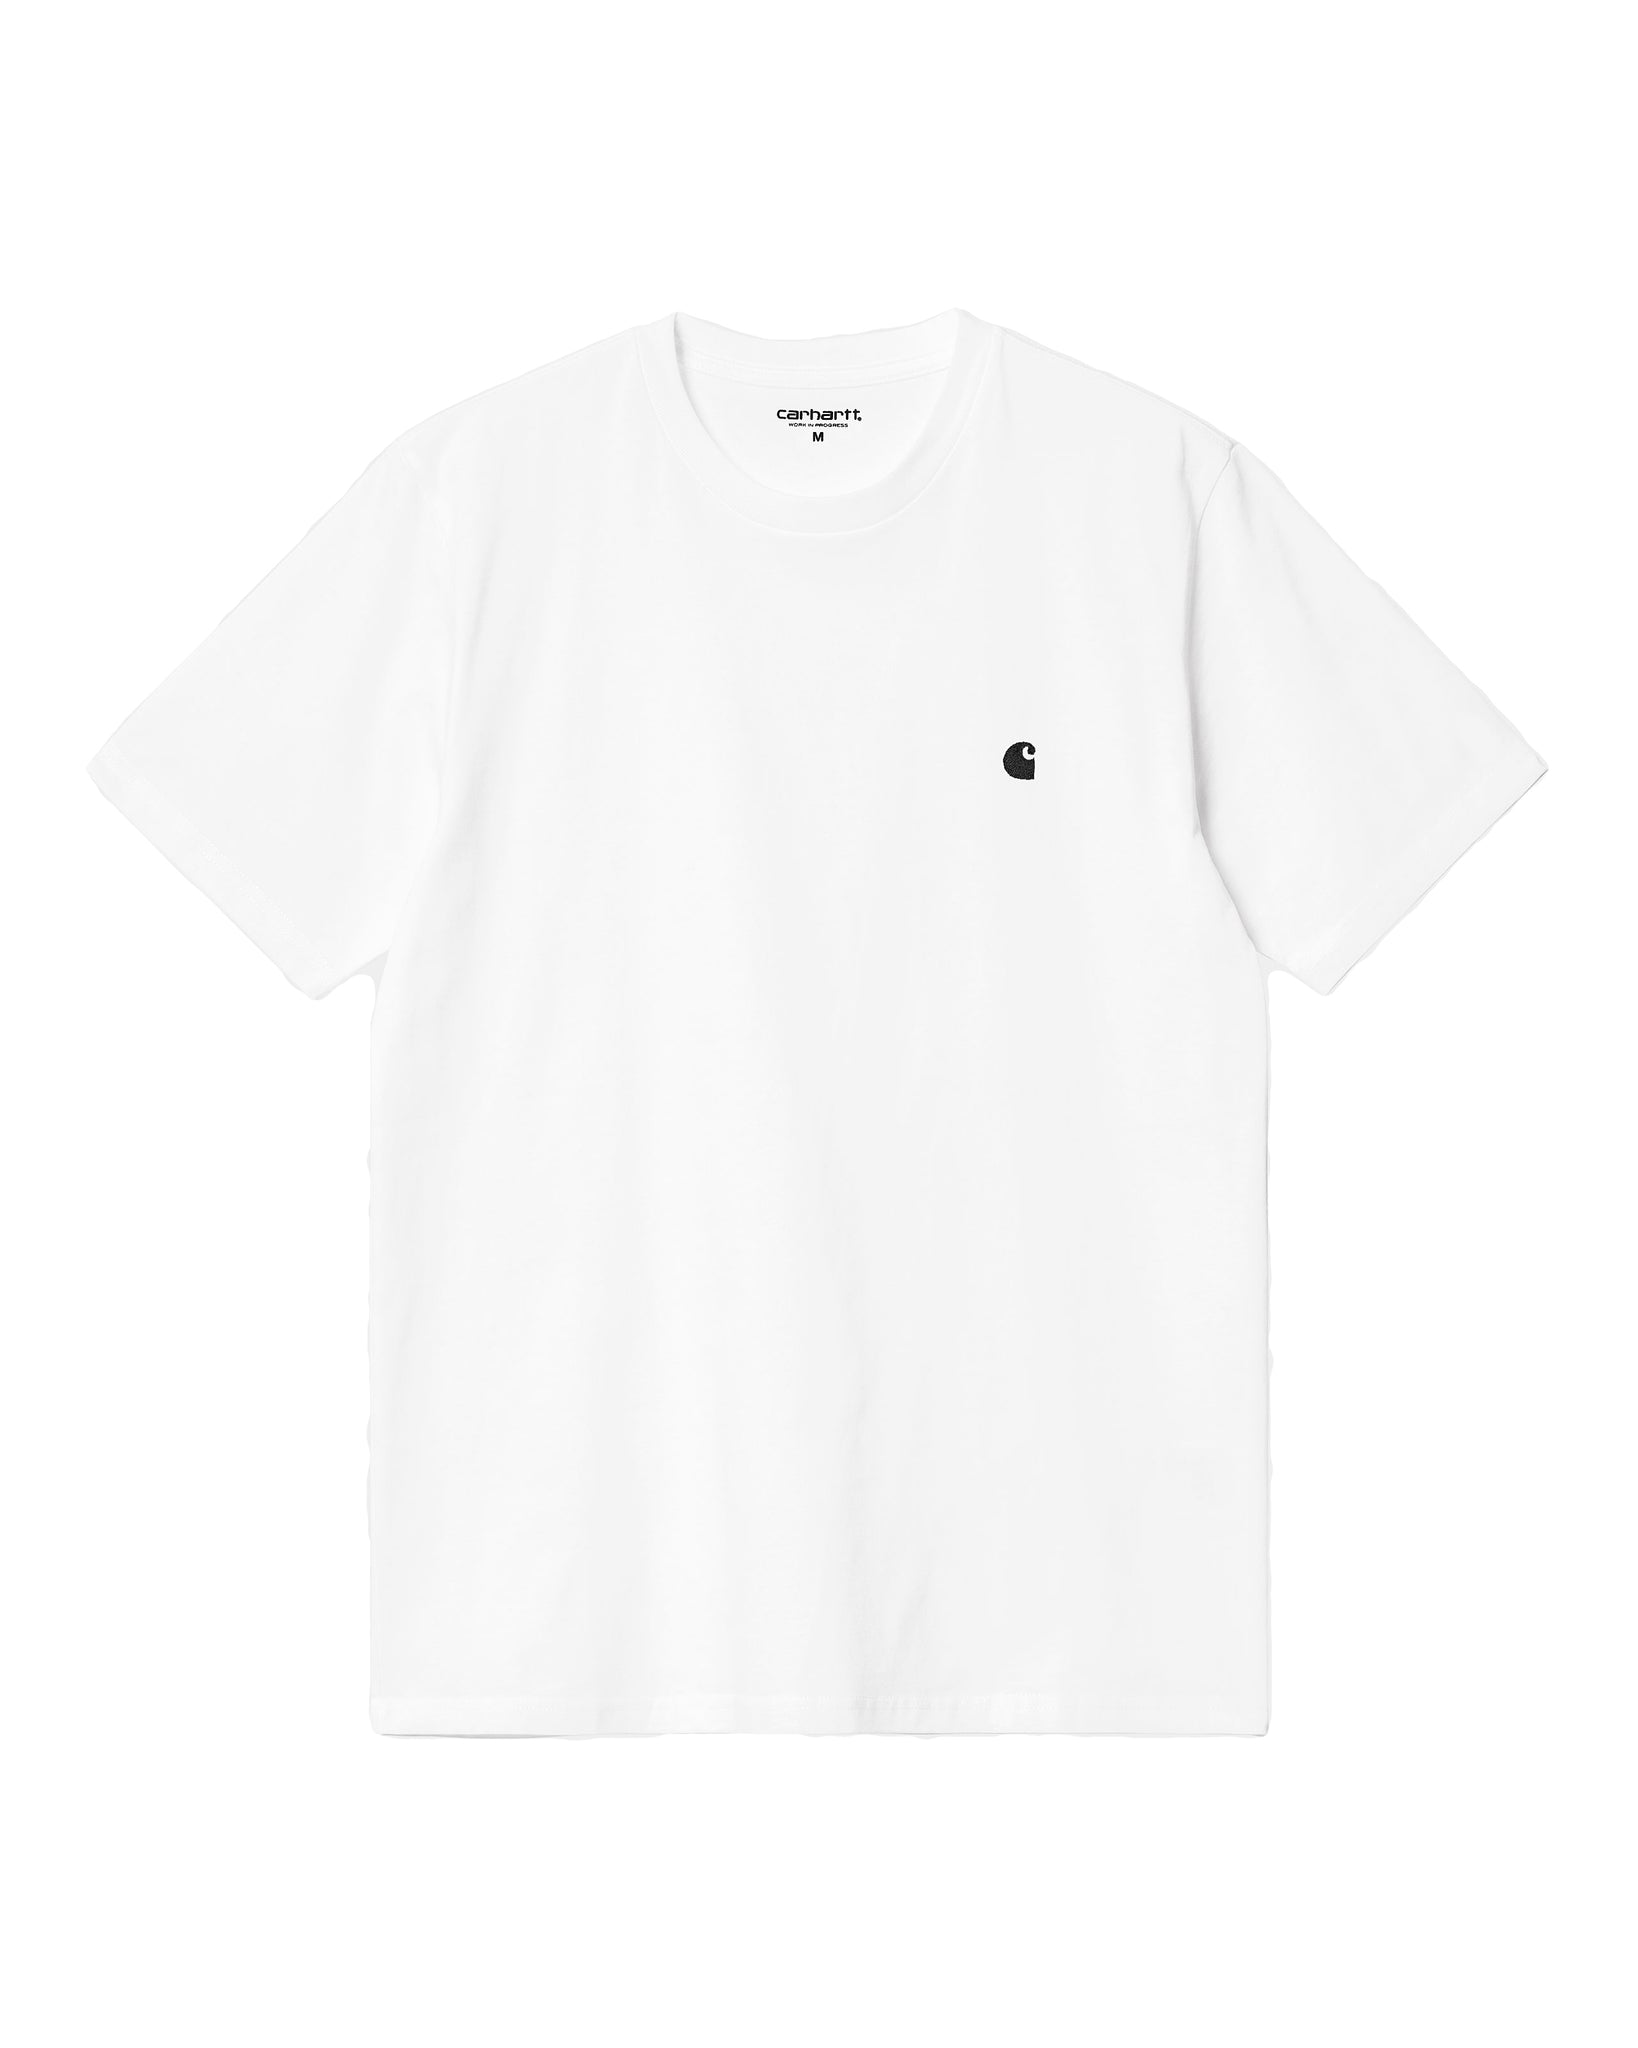 SS Madison T-Shirt - White/Black